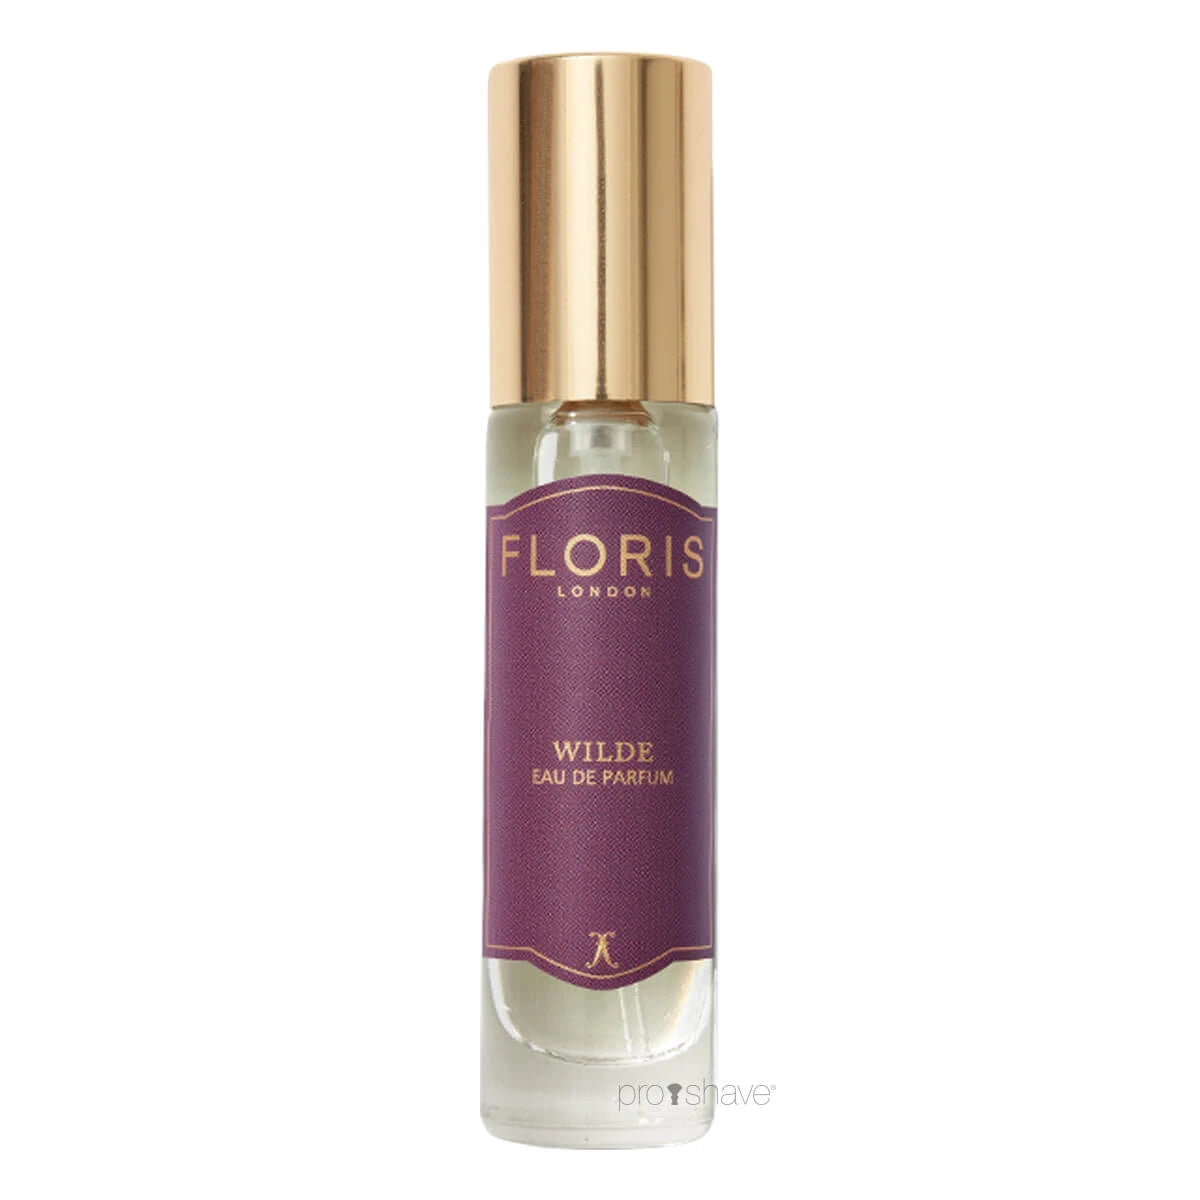 Floris Wilde, Eau de Parfum, 10 ml.